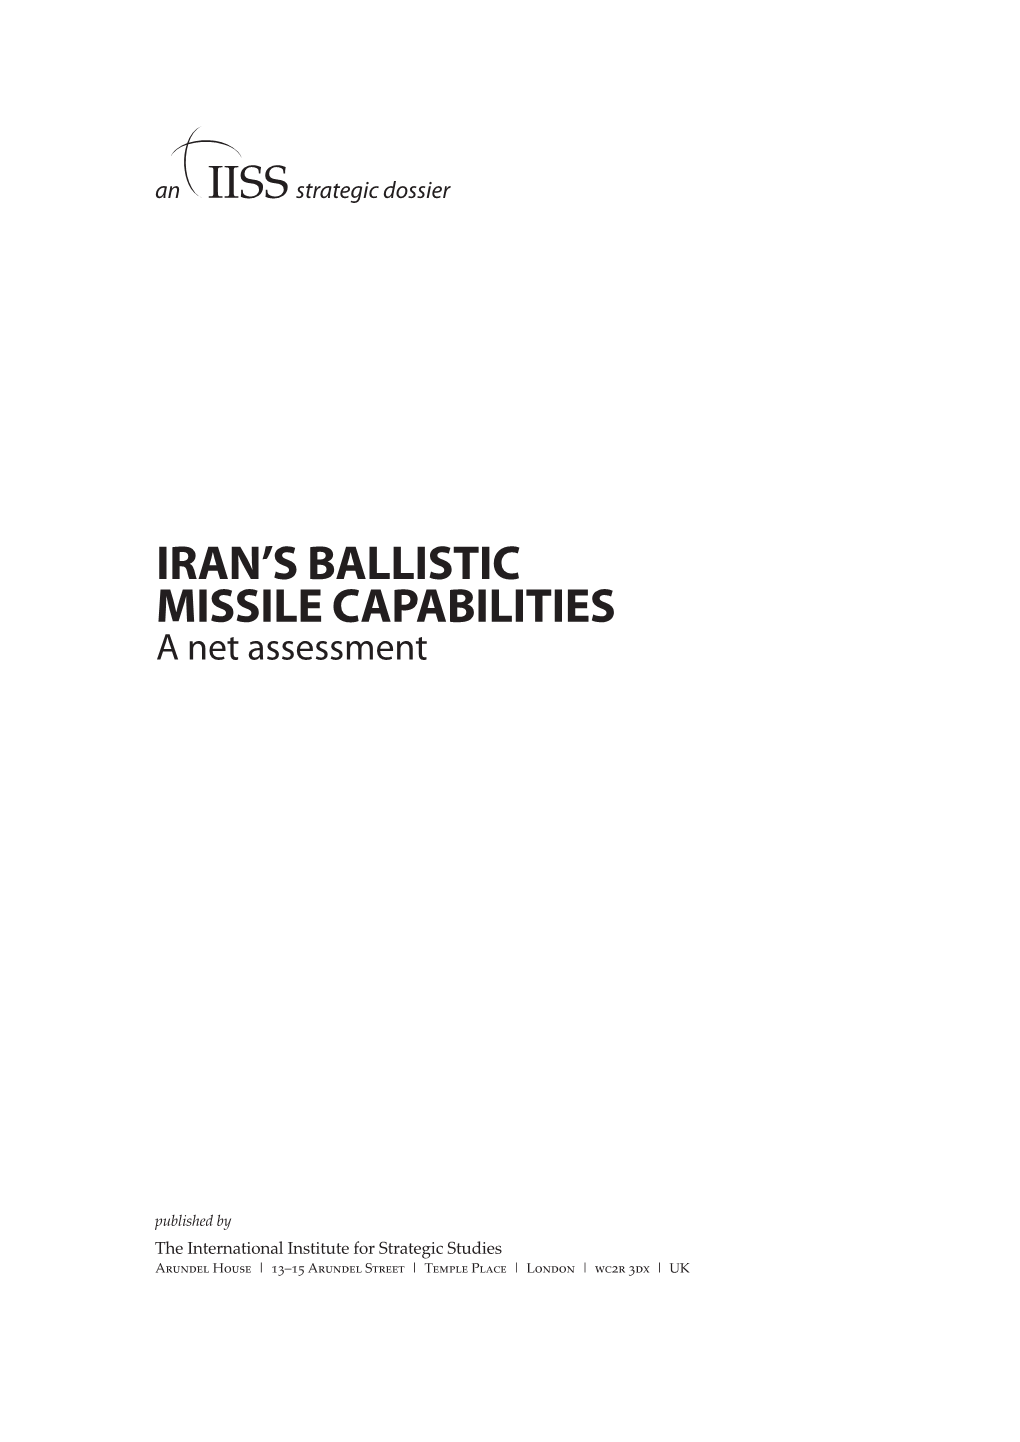 Iran's Ballistic Missile Capabilities